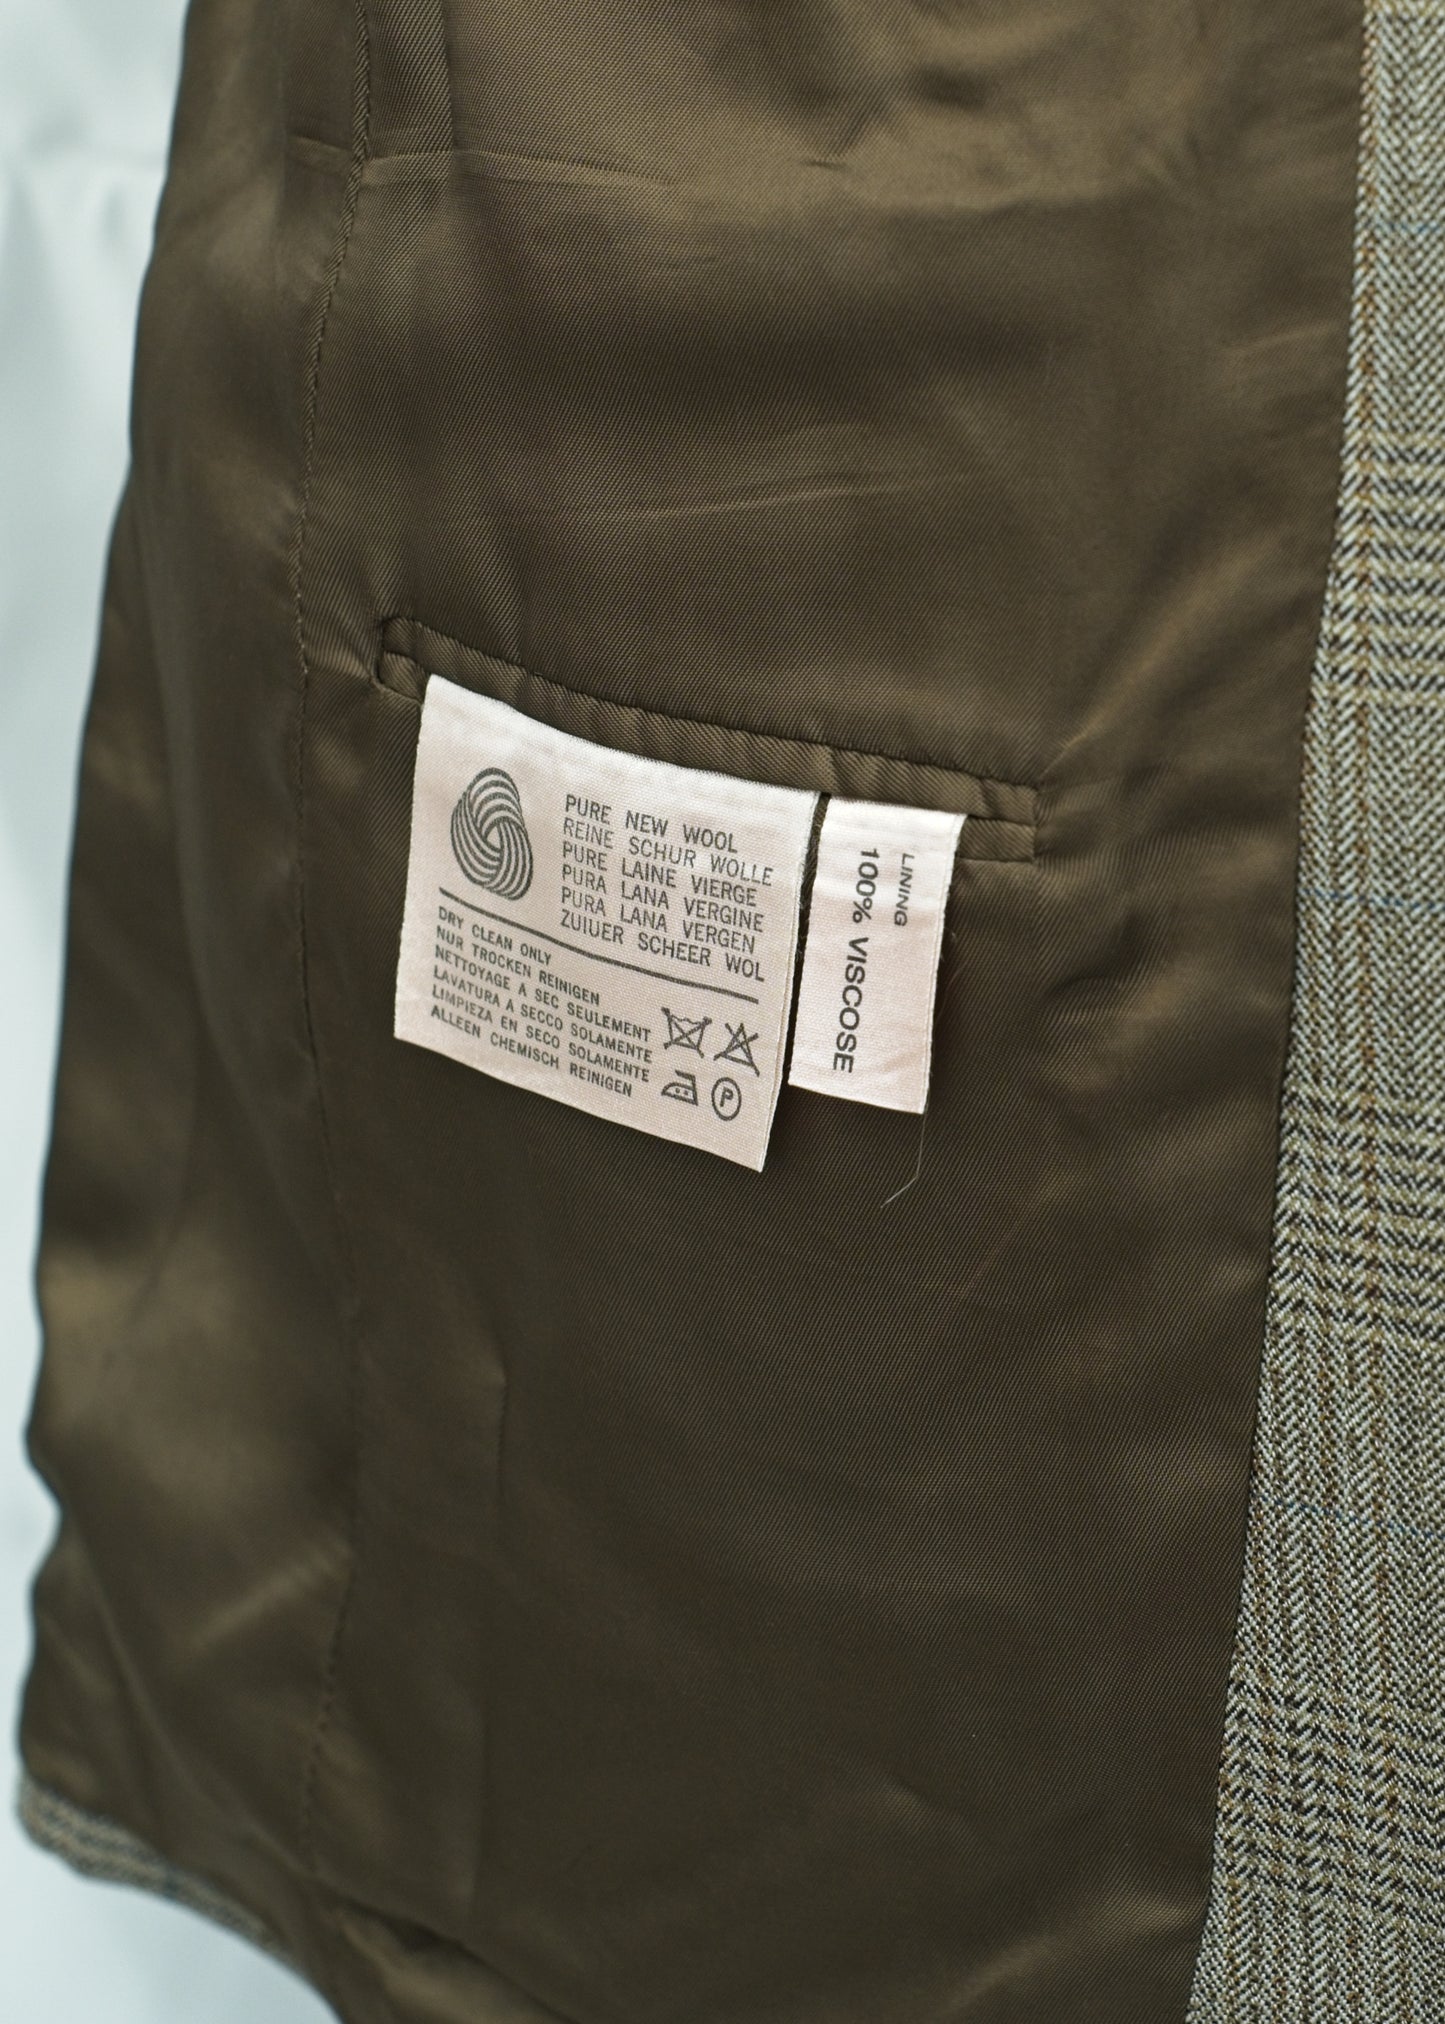 Men's Vintage 60s Aquascutum Plaid Blazer Sports Jacket